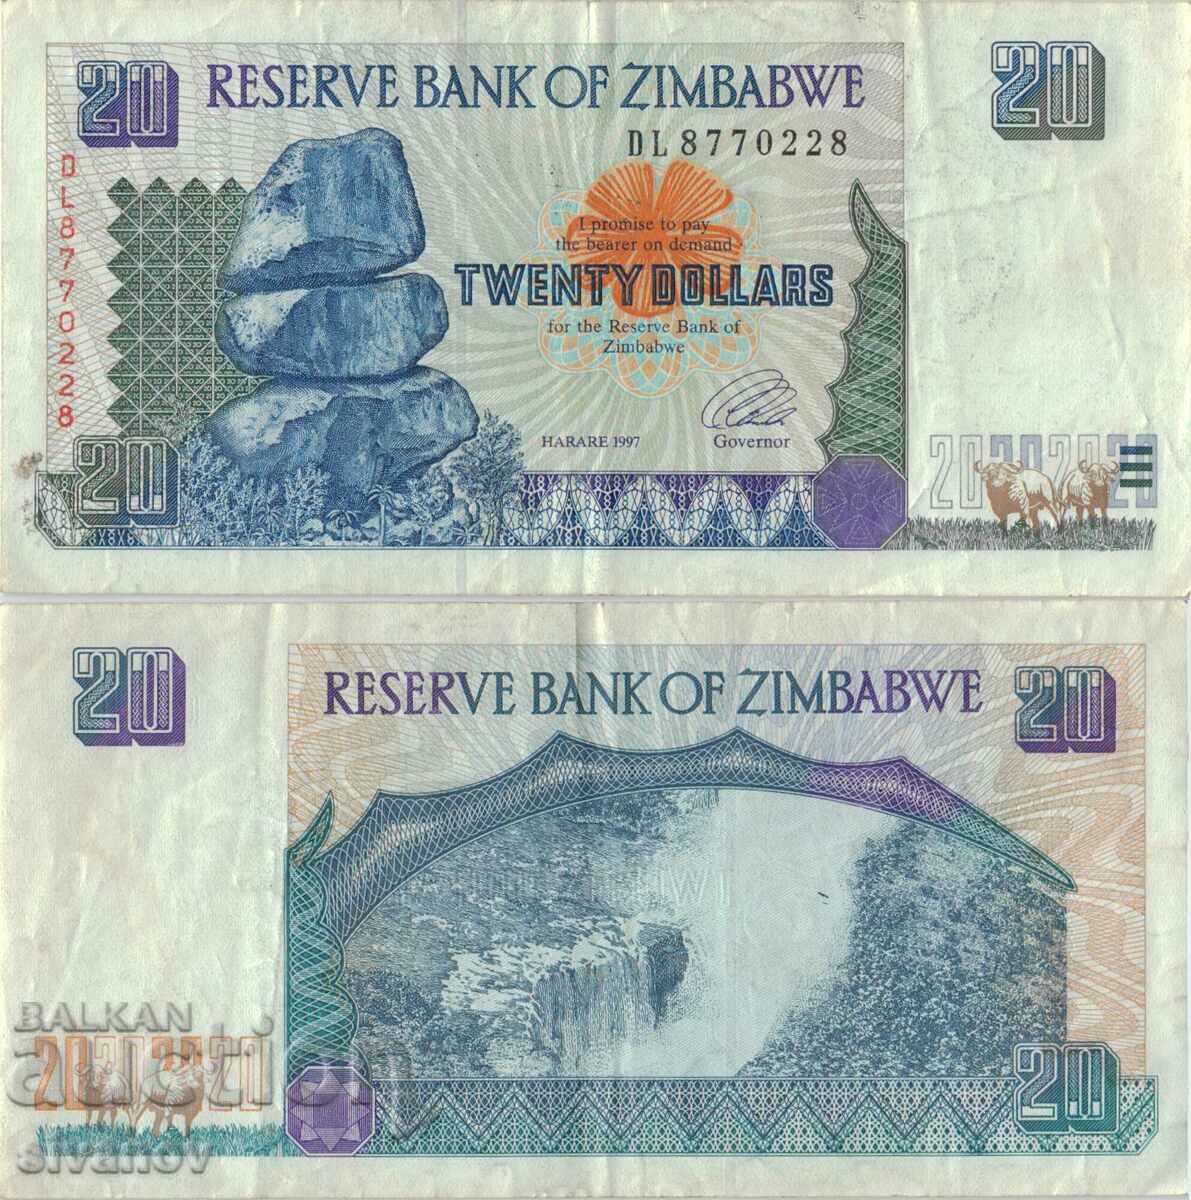 Zimbabwe $20 1997 Banknote #5164